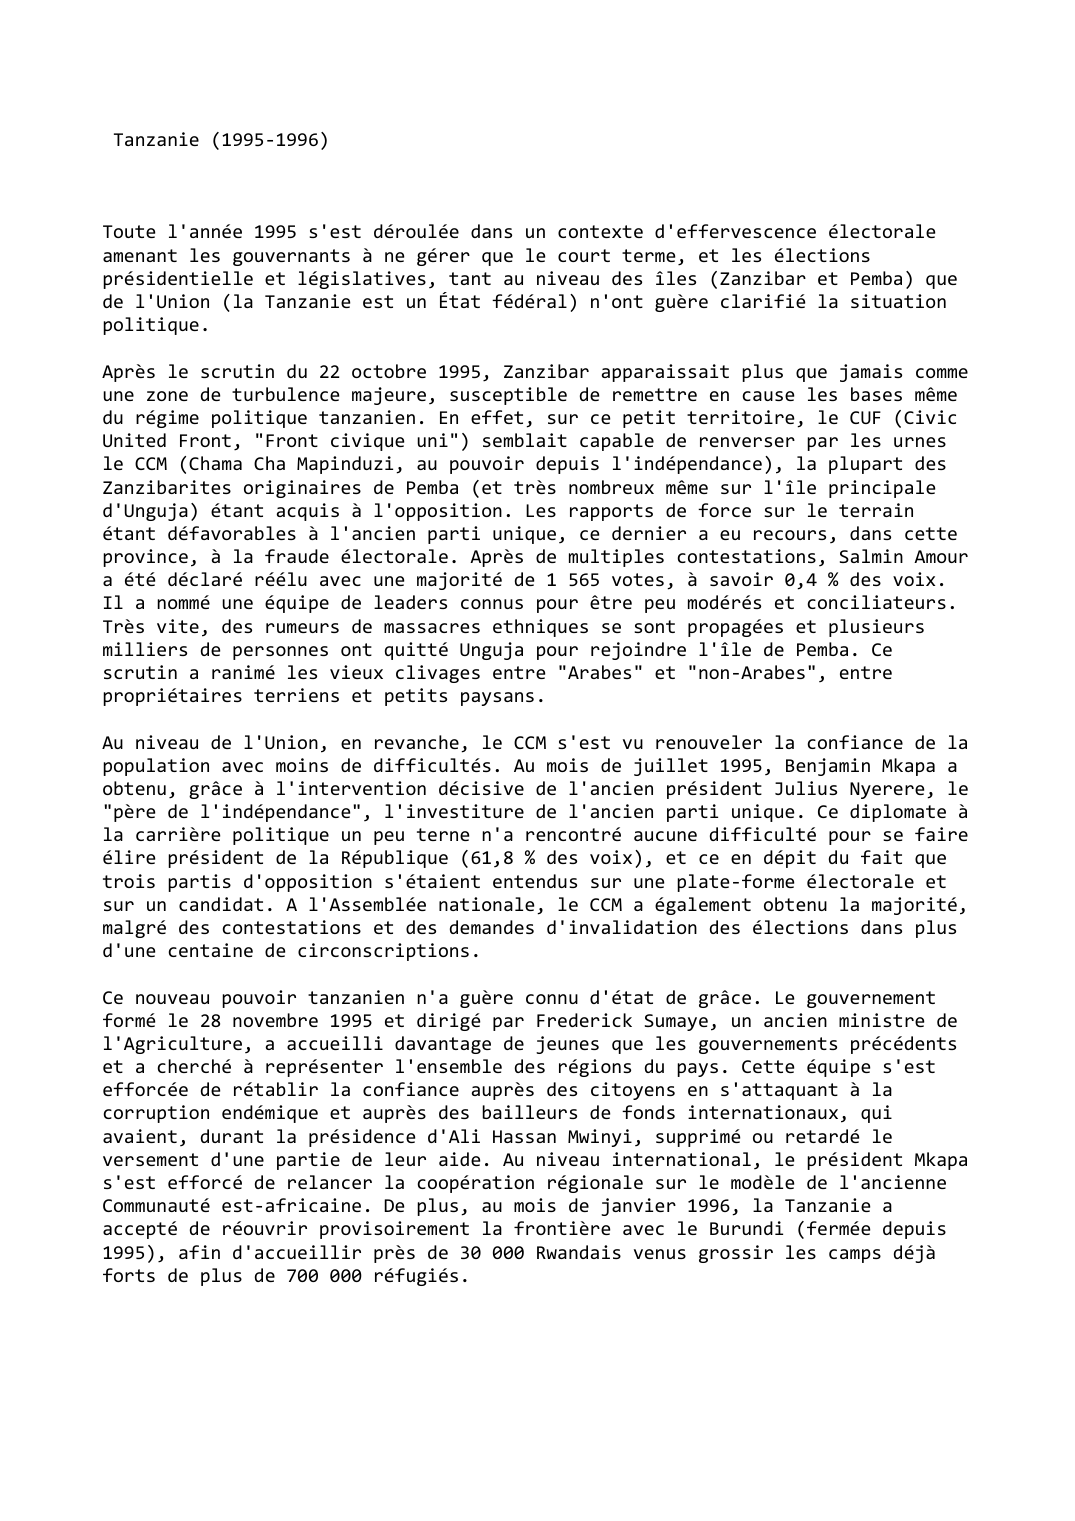 Prévisualisation du document Tanzanie (1995-1996)